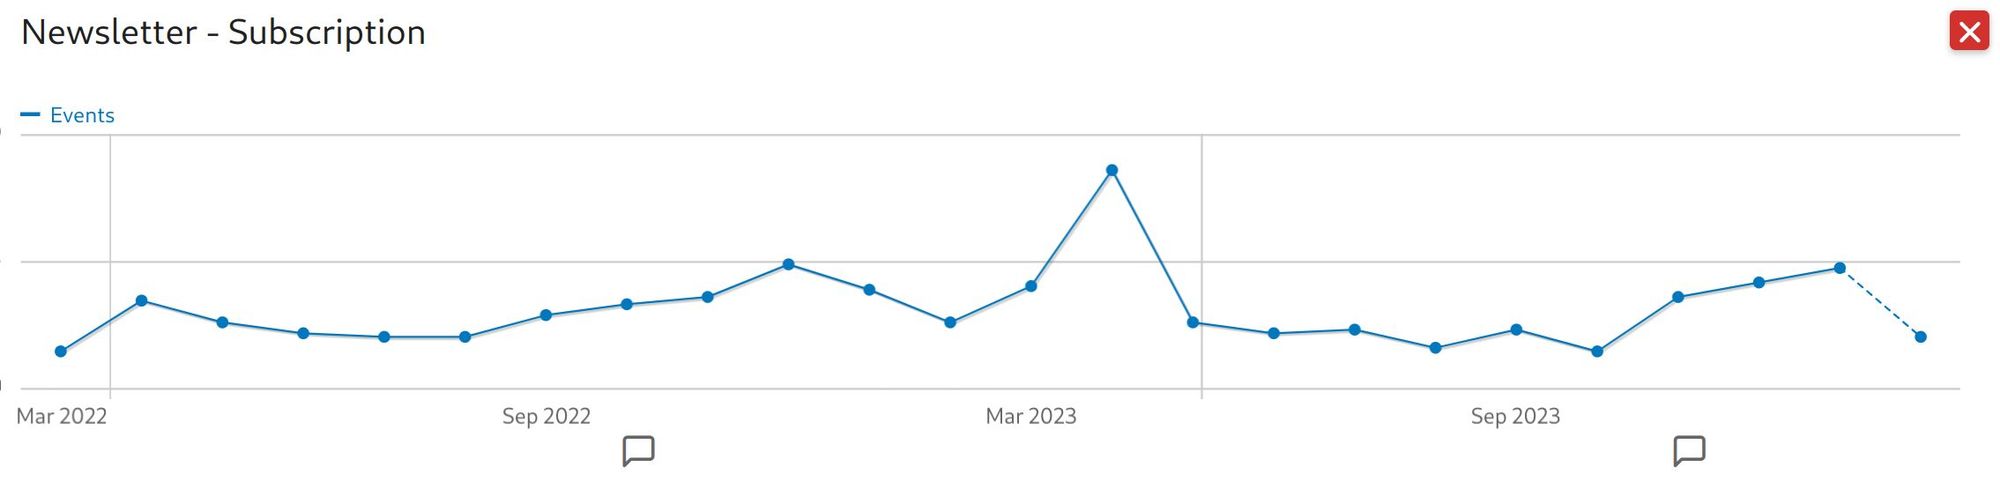 Matomo data line chart for newsletter sign ups over time